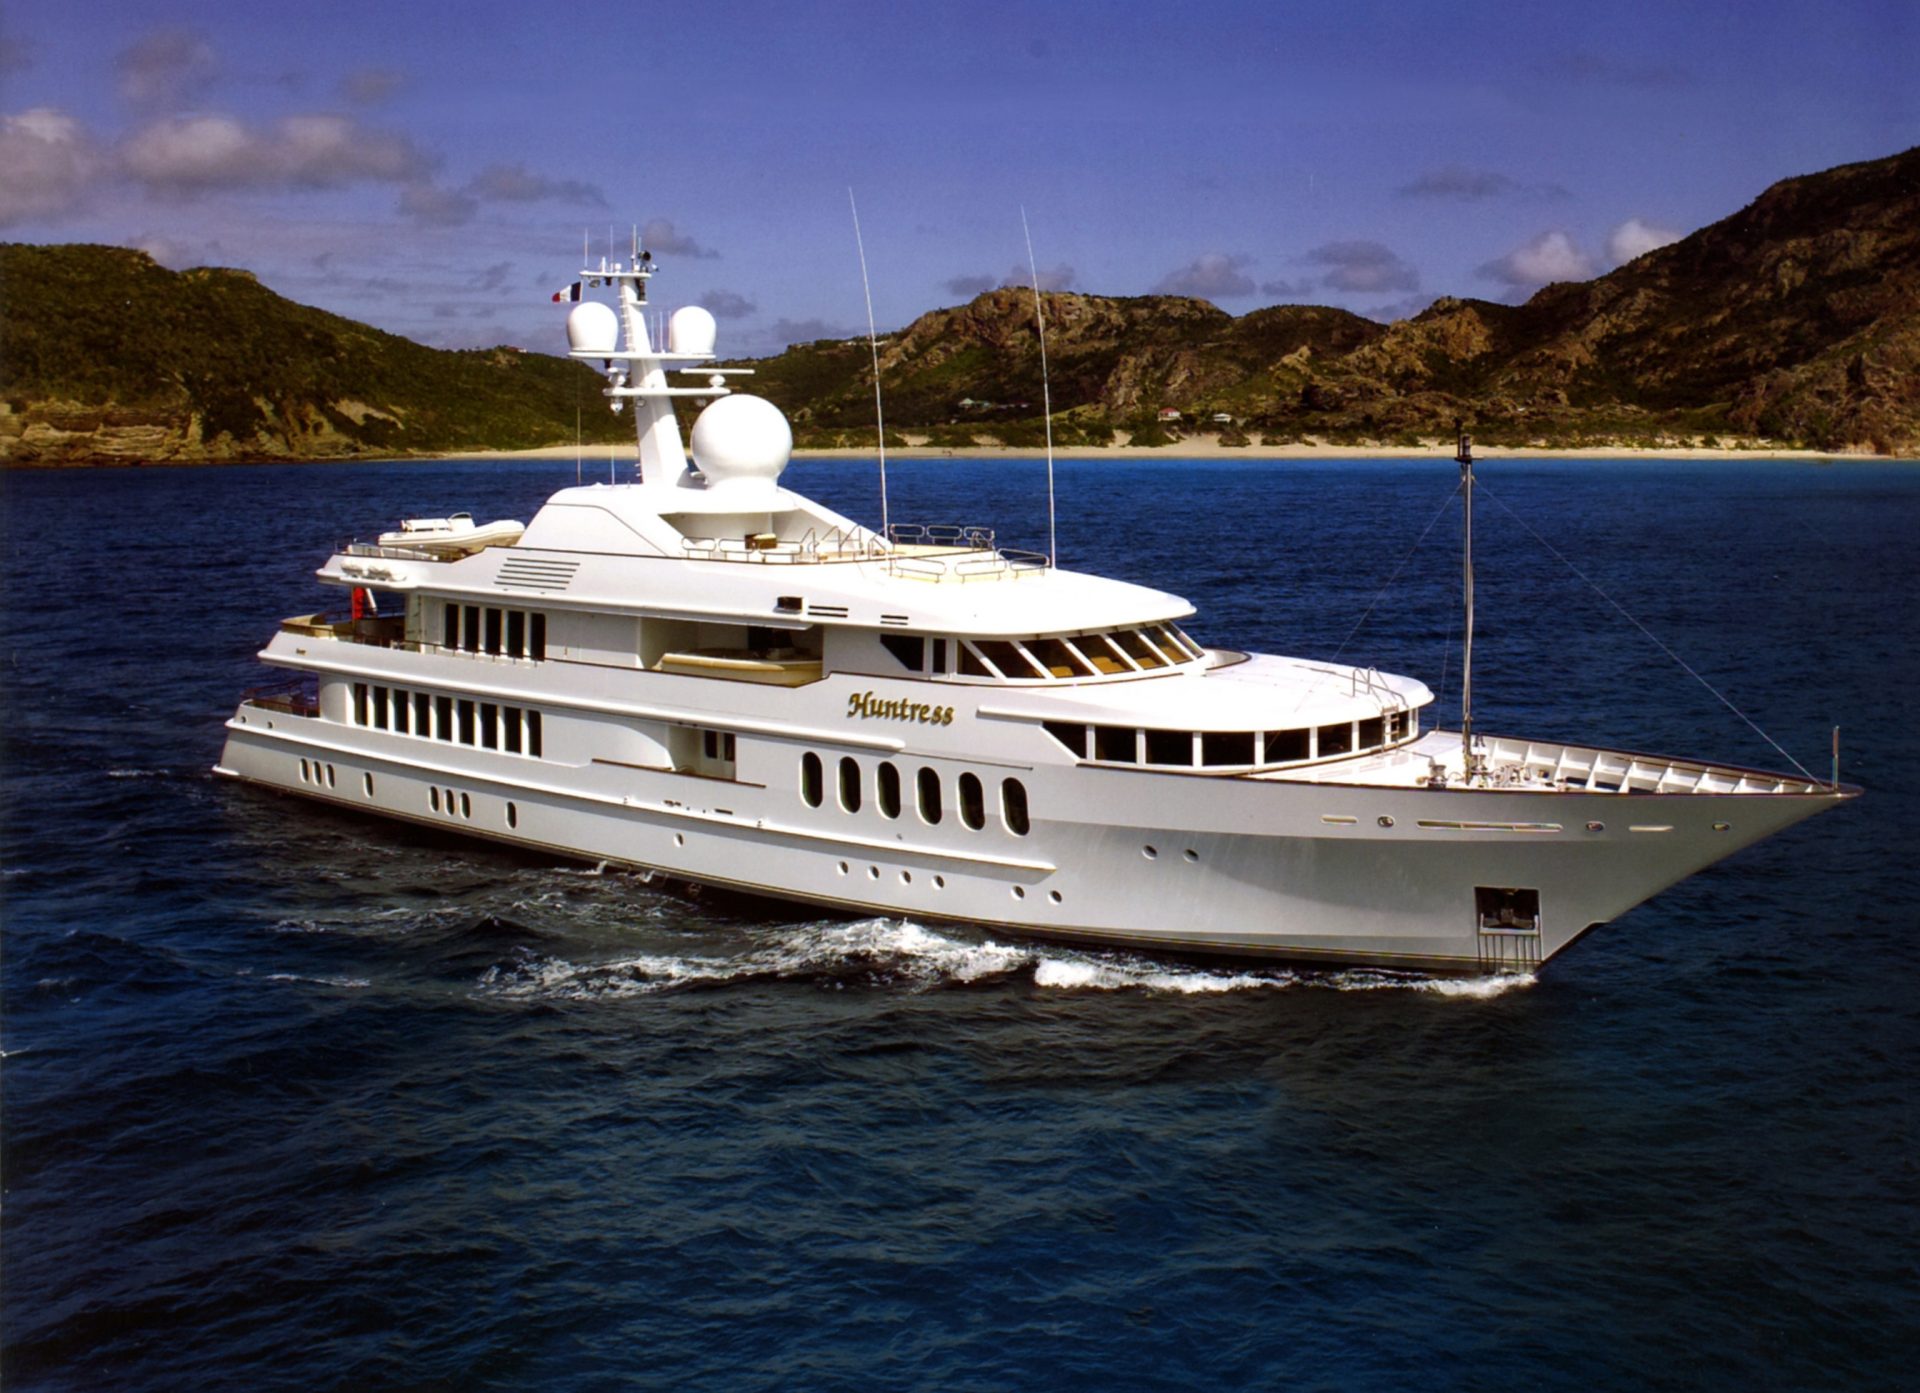 HUNTRESS II yacht Charter Brochure